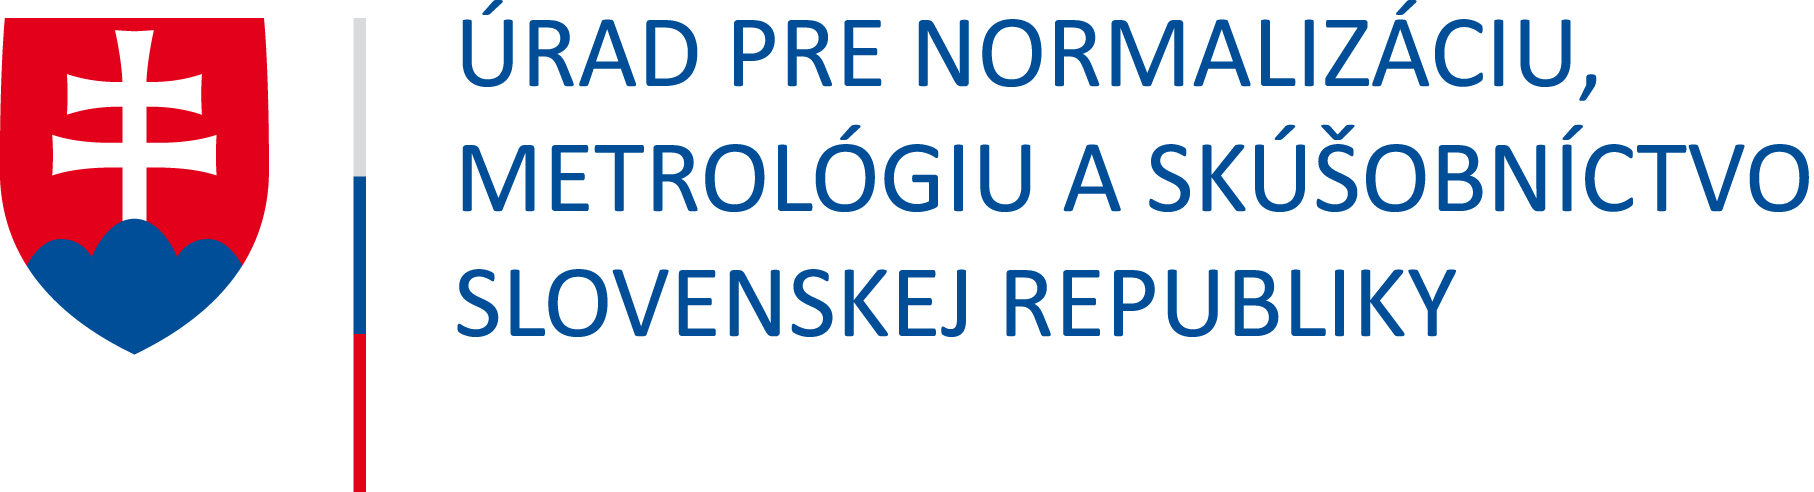 UNMS logo